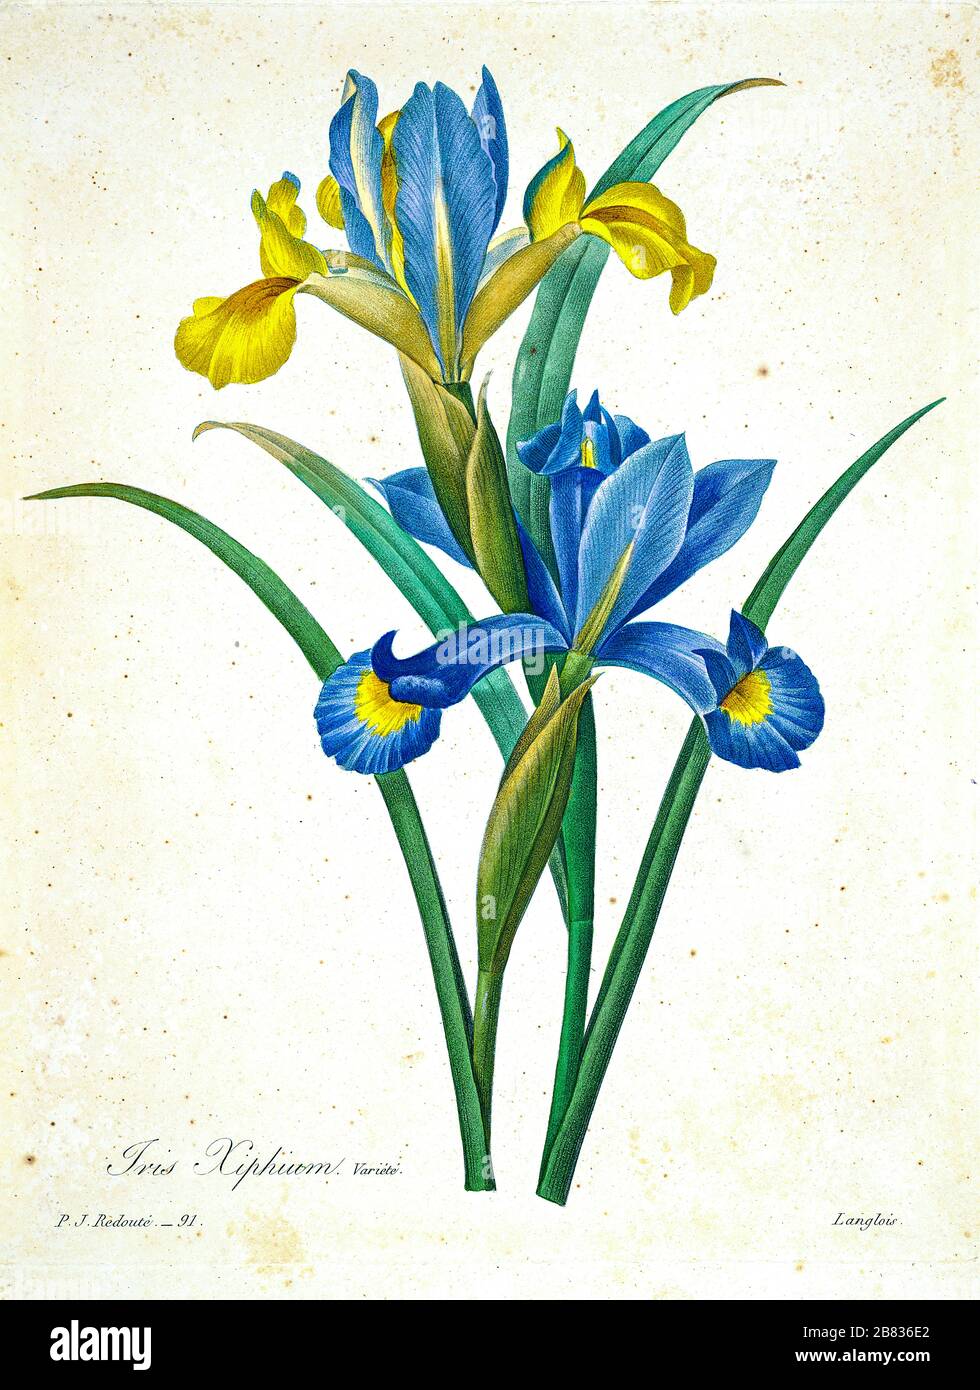 Floral Wall Art Print Iris Antique Botanical Print 1827 Dalmatian Iris